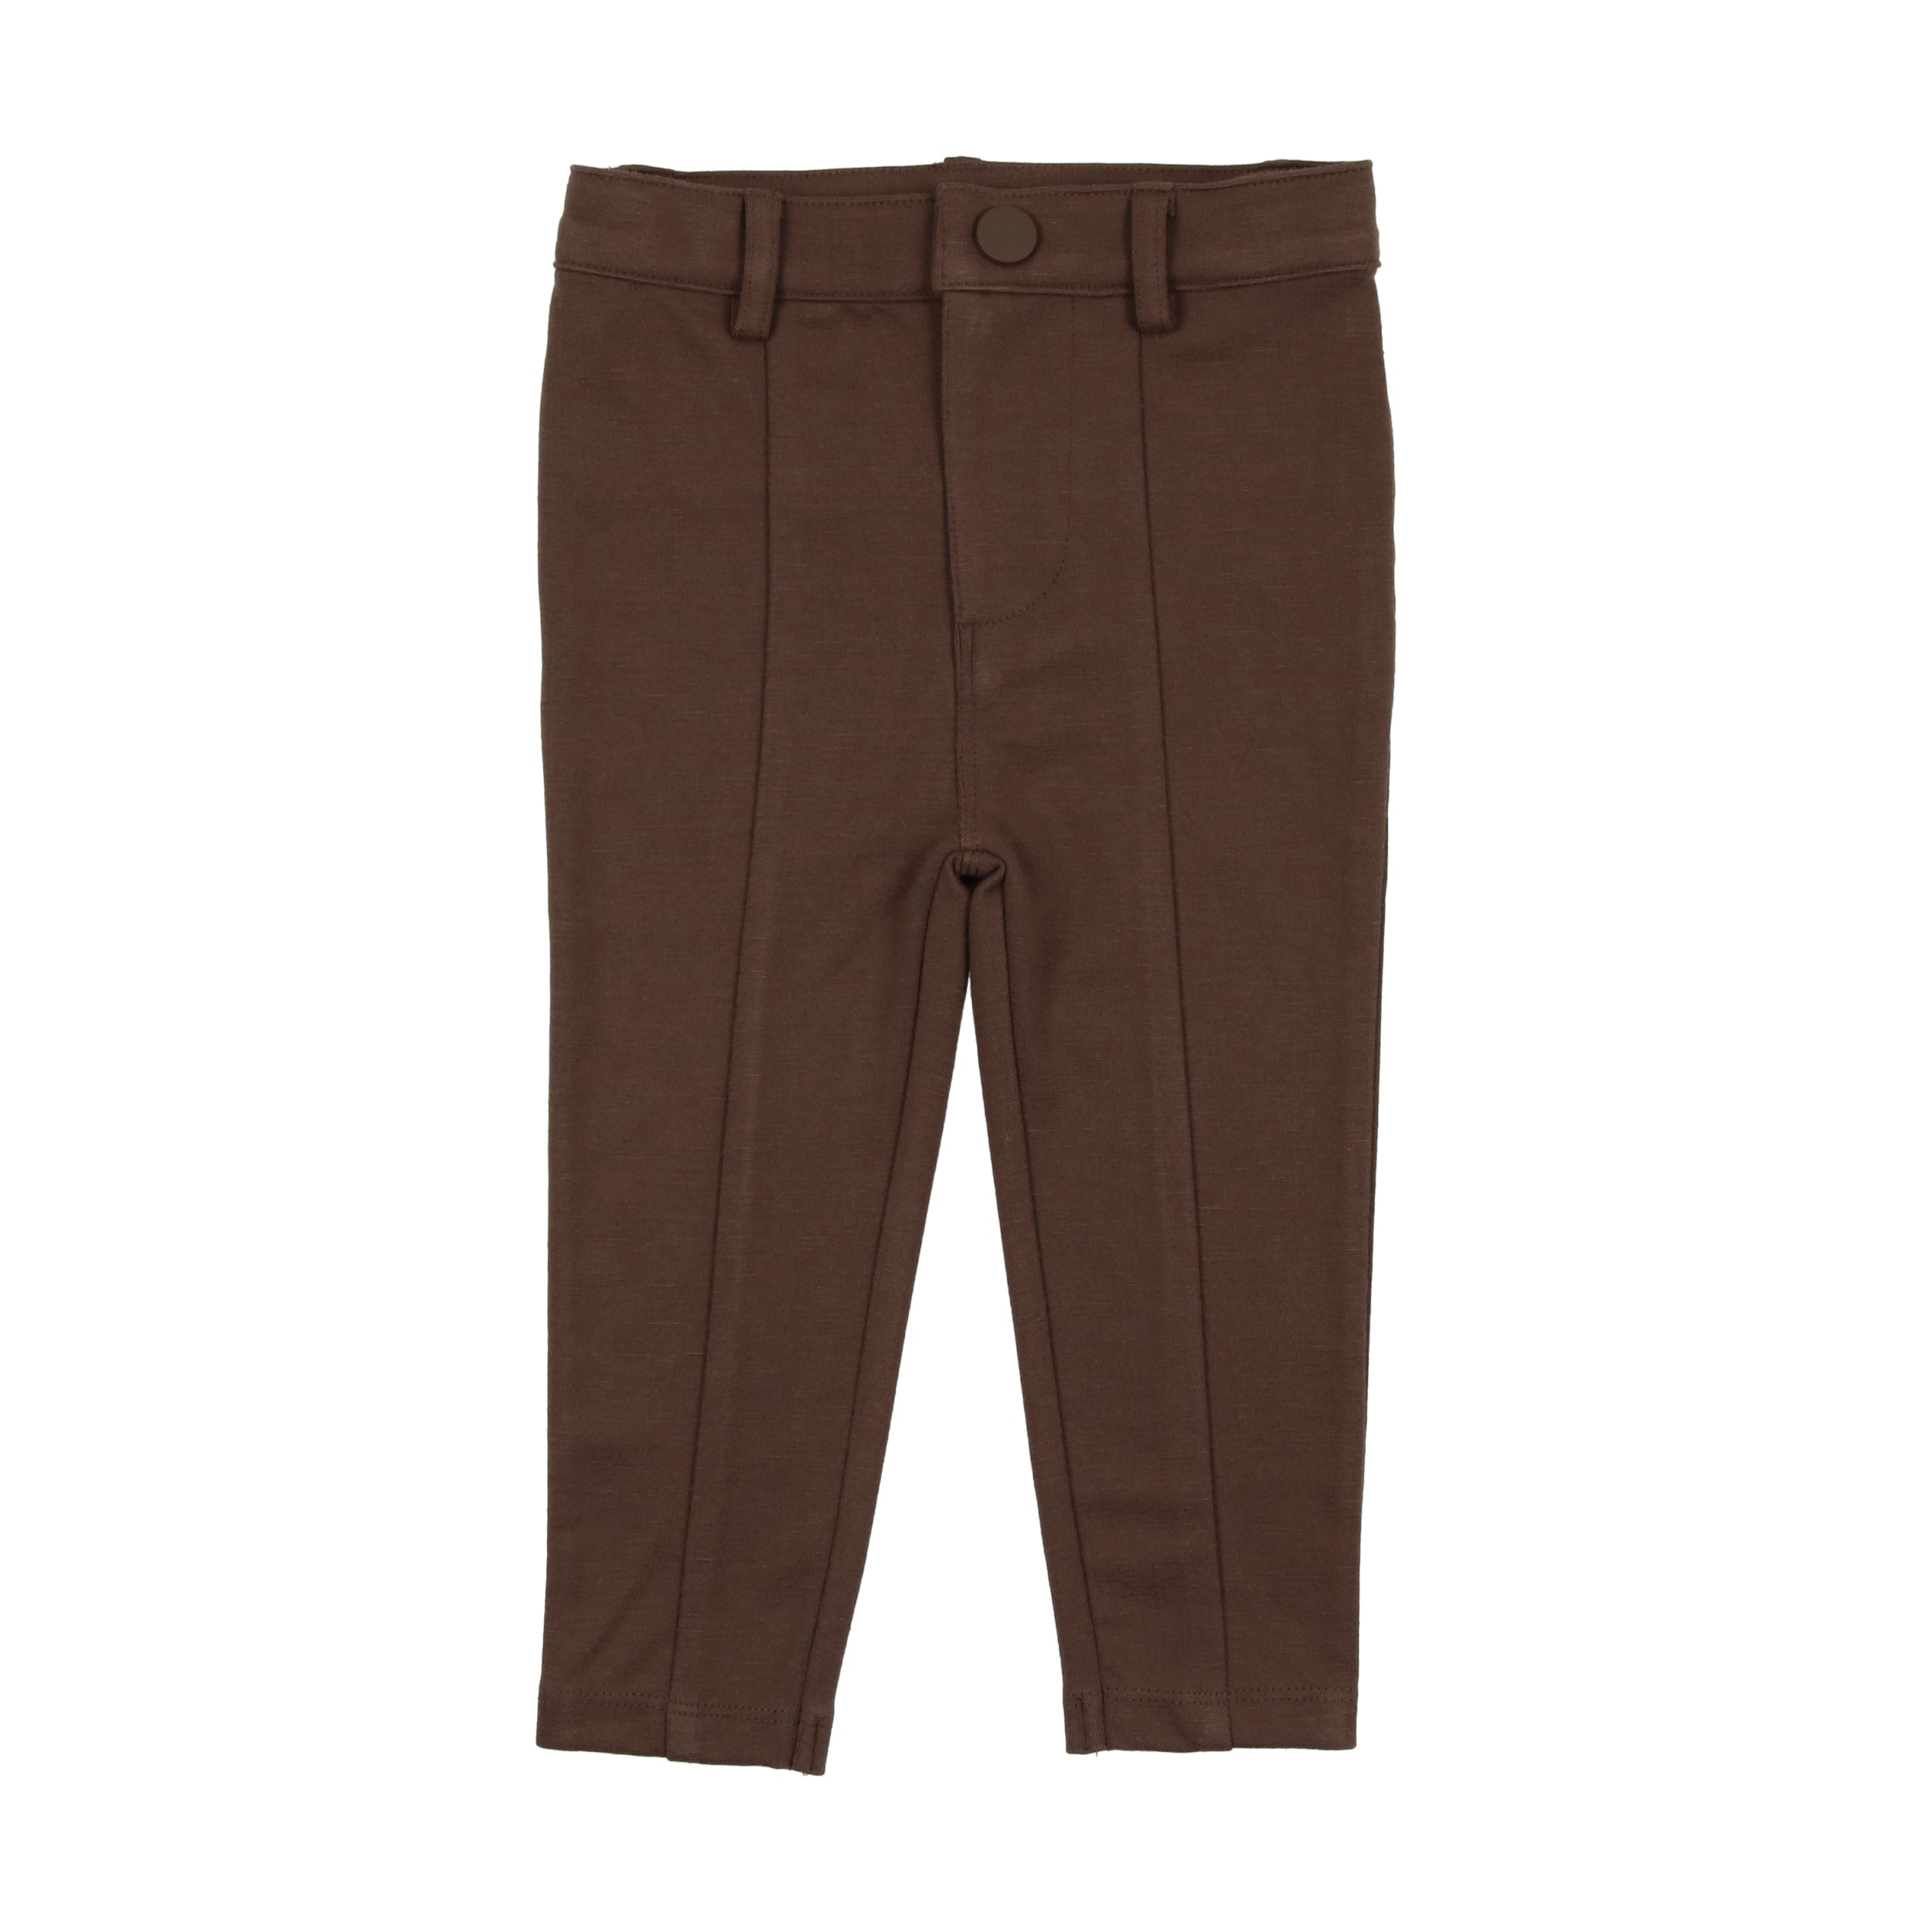 Vintage Boys Brown Pants and Striped Shirt, Toddler bOys Size 4t, 5 | Brown  pants, Striped shirt, Vintage boys